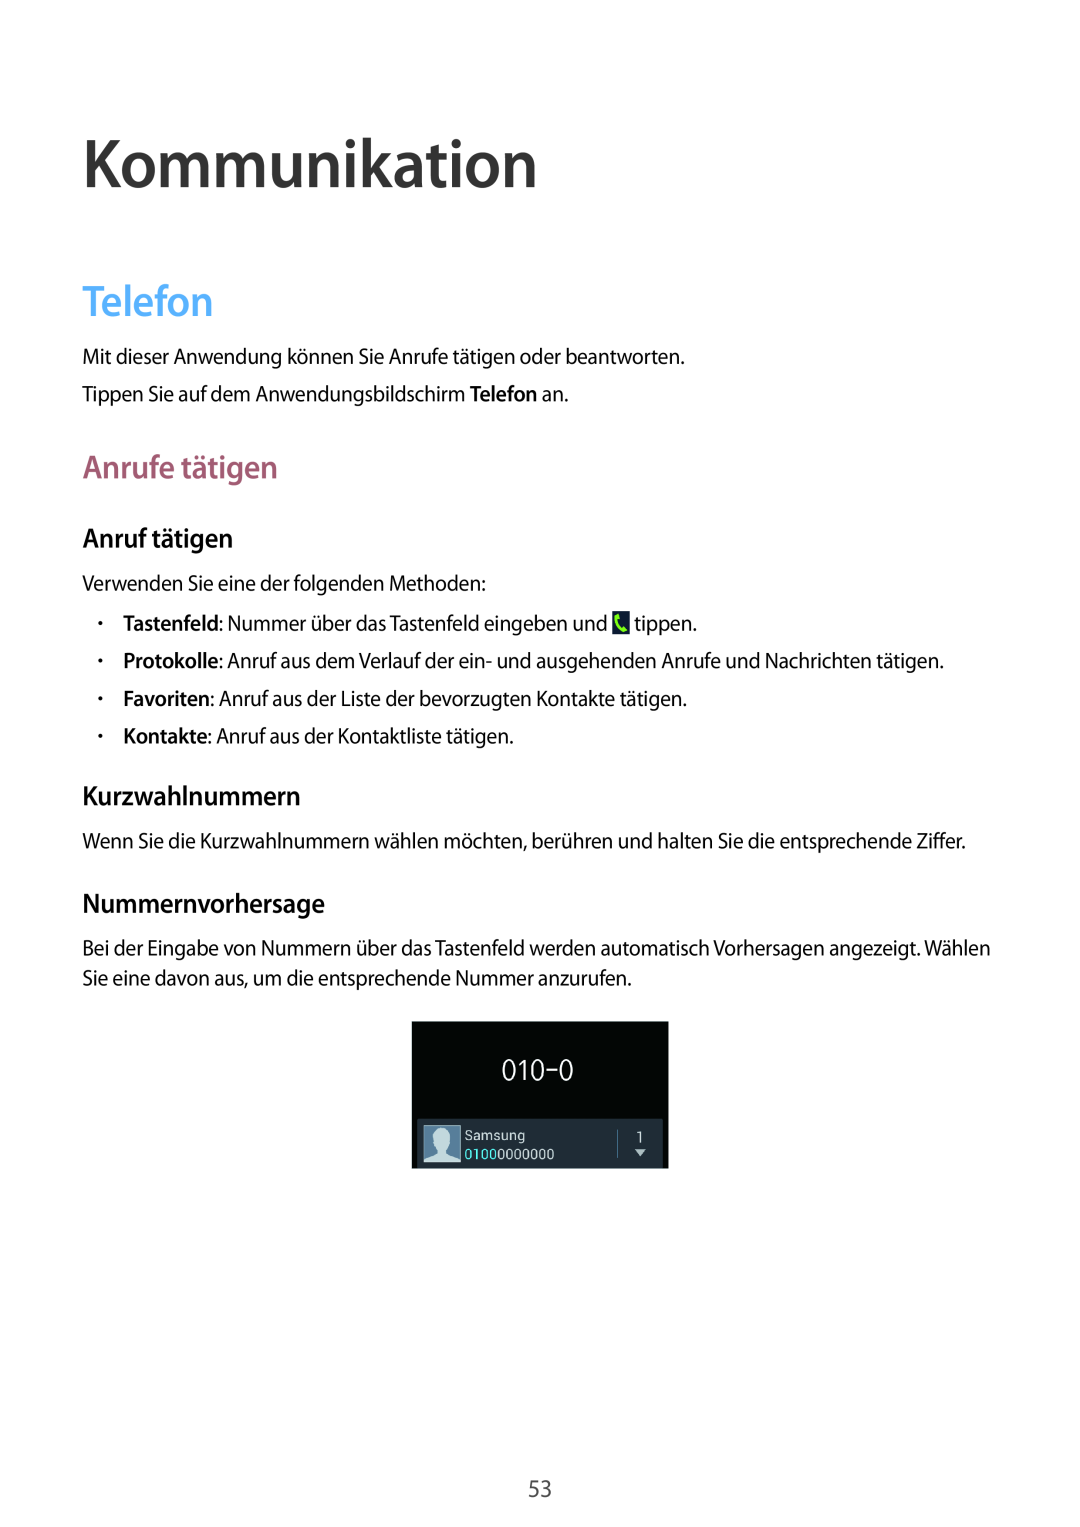 Samsung GT-N7100RWDITV manual Kommunikation, Telefon, Anrufe tätigen, Anruf tätigen, Kurzwahlnummern, Nummernvorhersage 